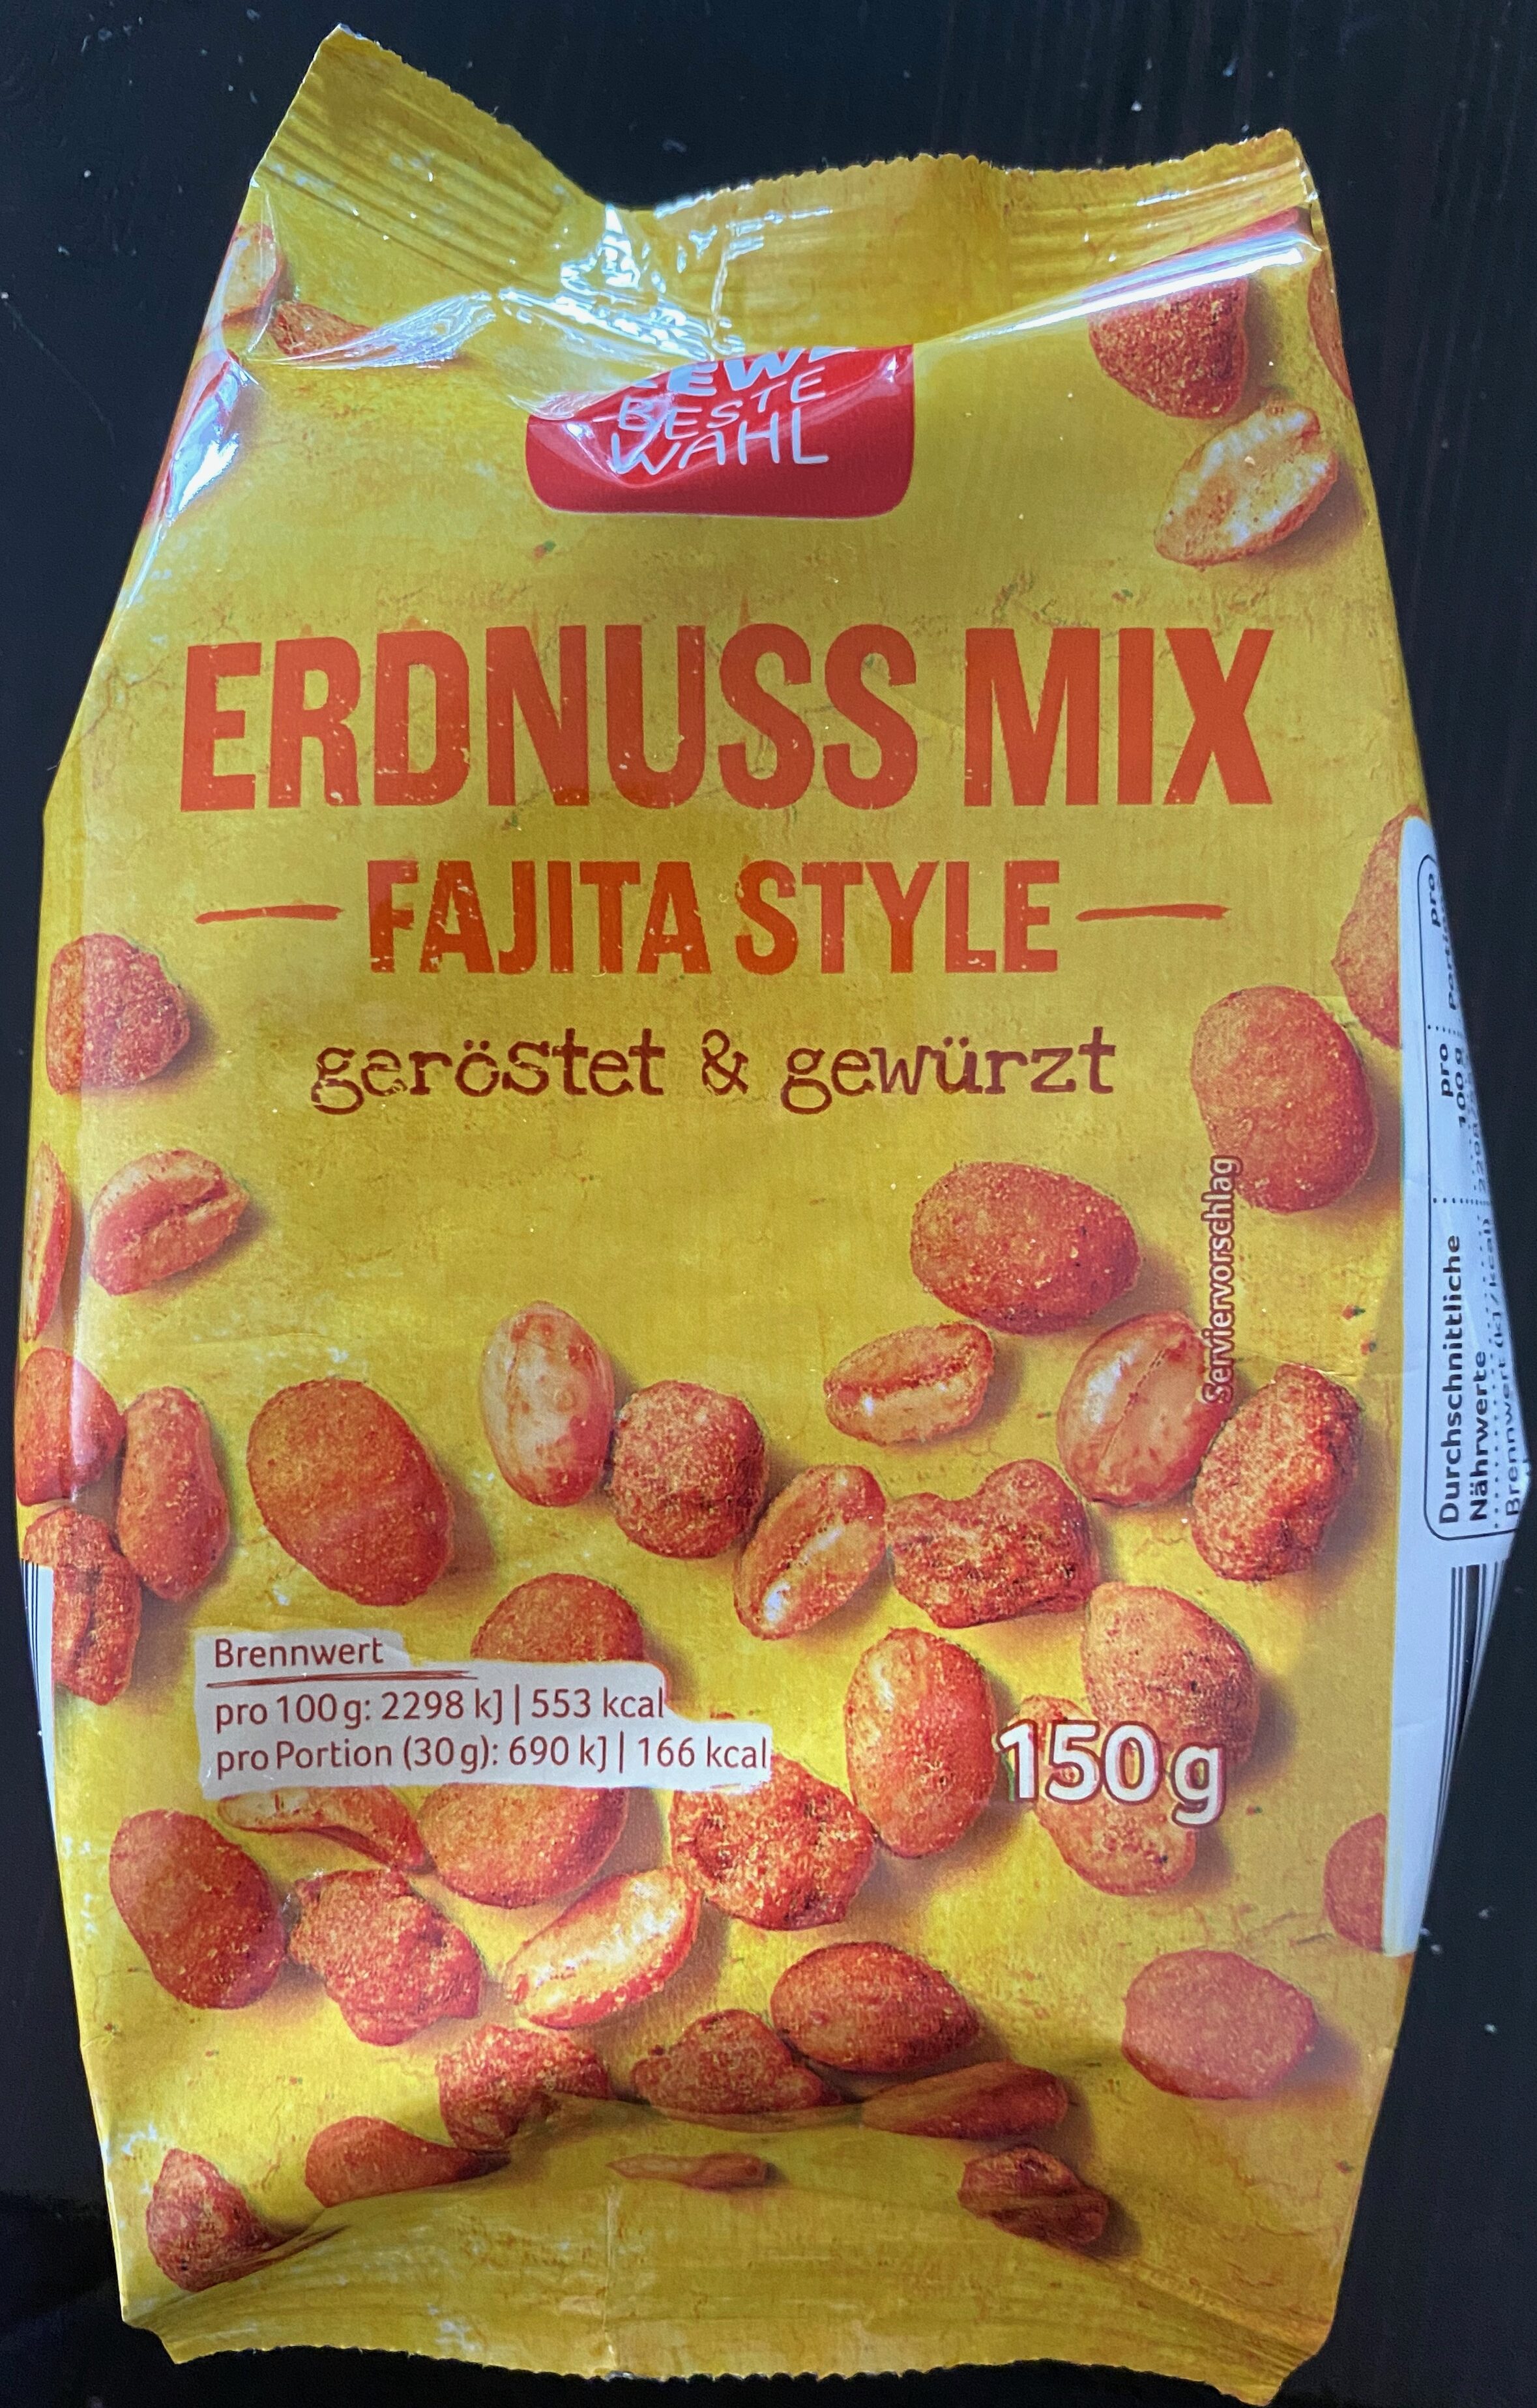 Rewe Beste Wahl Erdnuss Mix Fajita Style - Produit - de